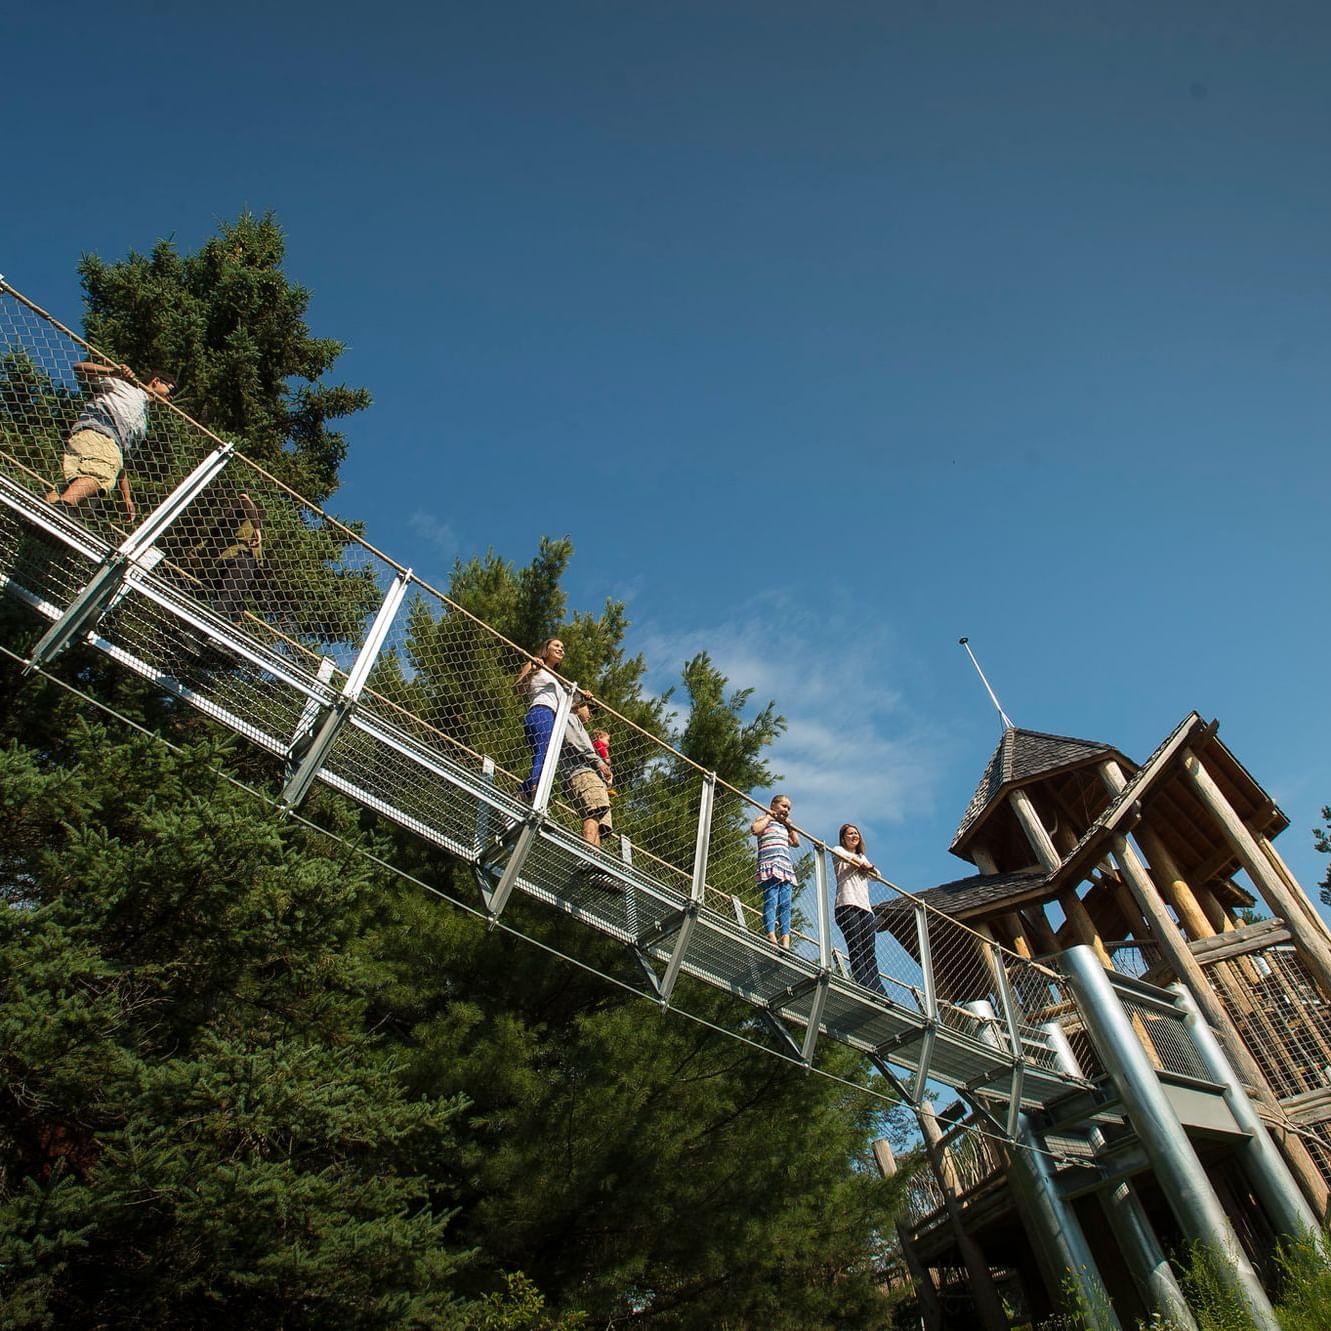 People on a metal bridge at the Wild Center, High Peaks Resort